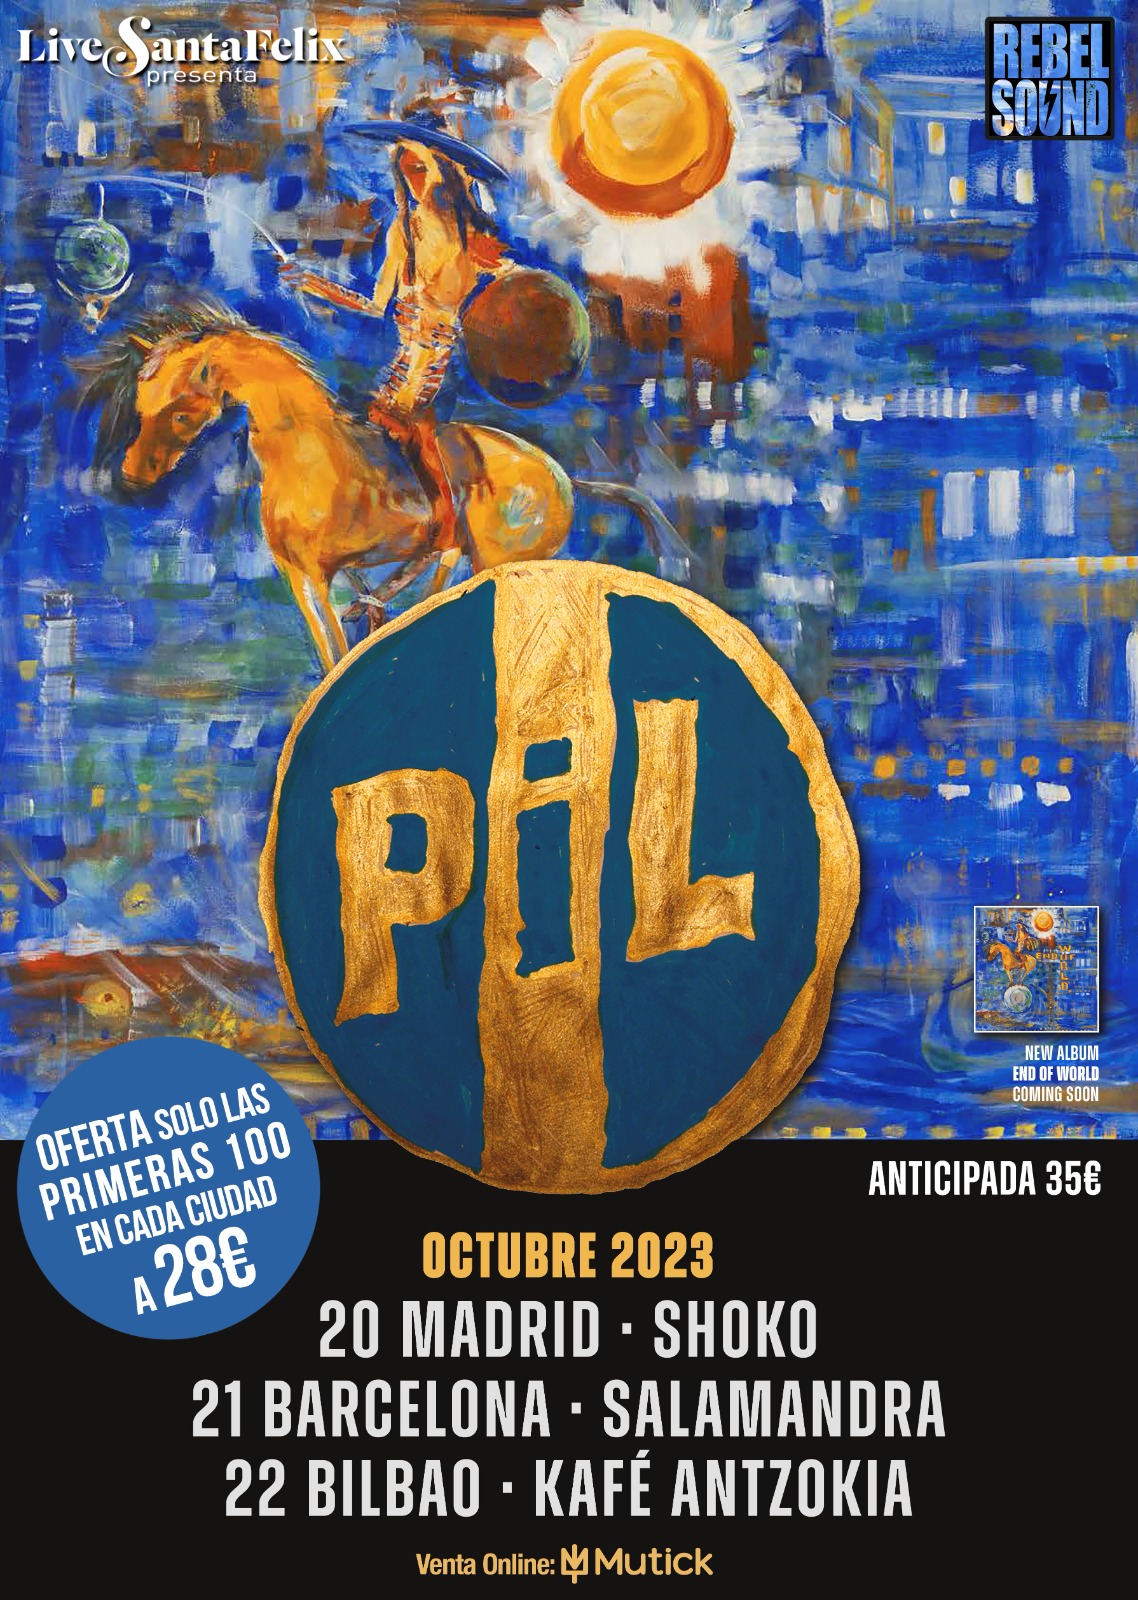 PIL (Public Image Limited) en Barcelona - Mutick